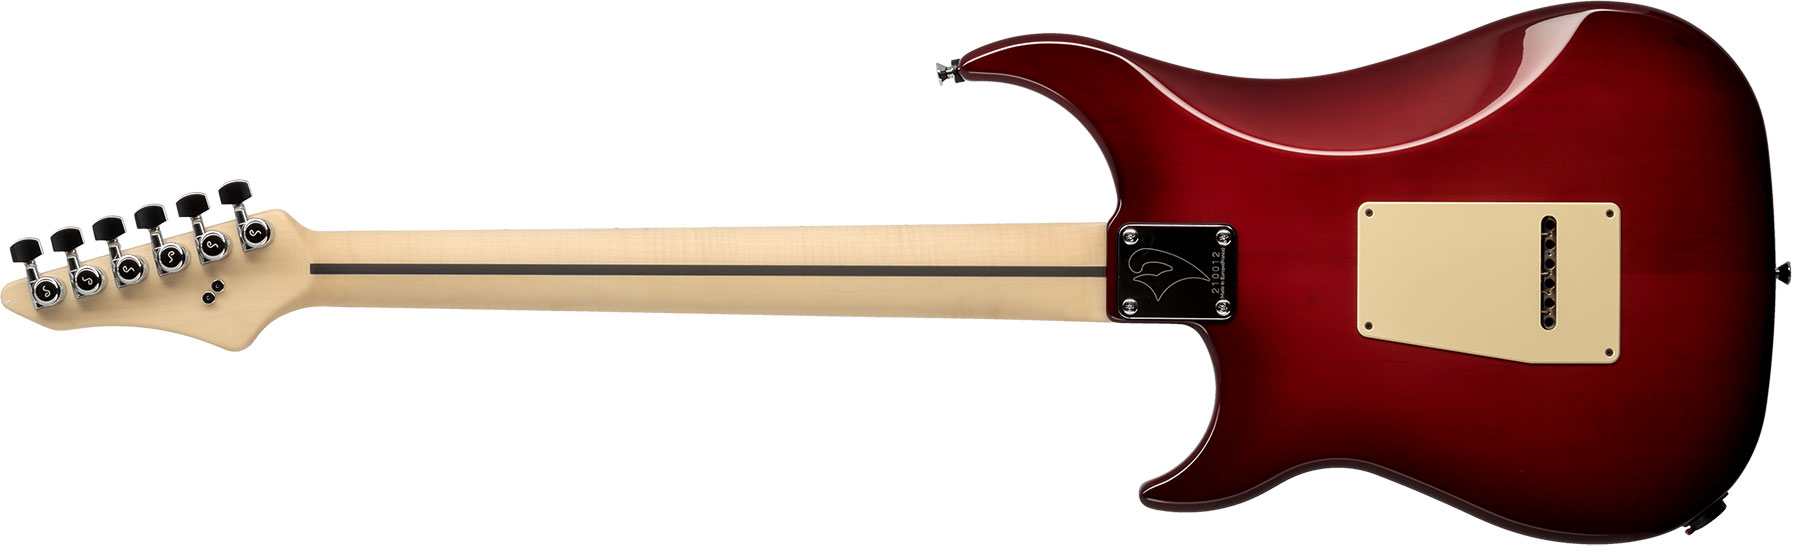 Vigier Excalibur Supraa Hsh Trem Mn - Clear Red - Guitare Électrique Forme Str - Variation 1